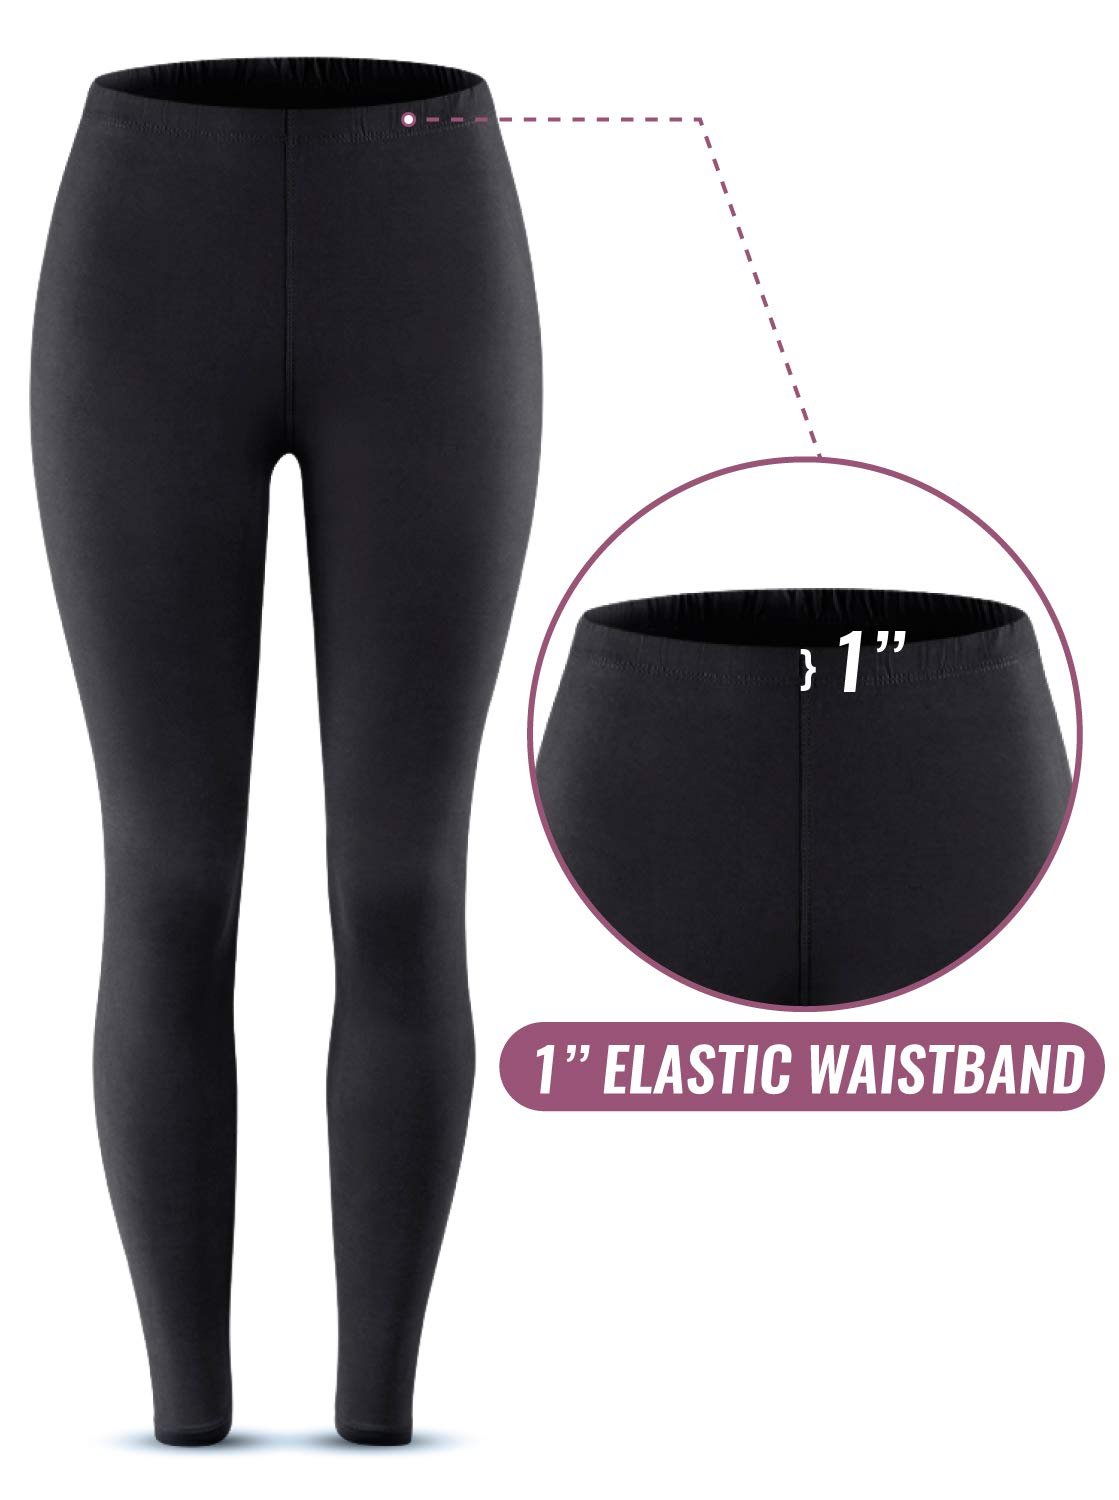 SATINA High Waisted Leggings for Women | Full Length | 1 Inch Waistband (Black, Plus Size)